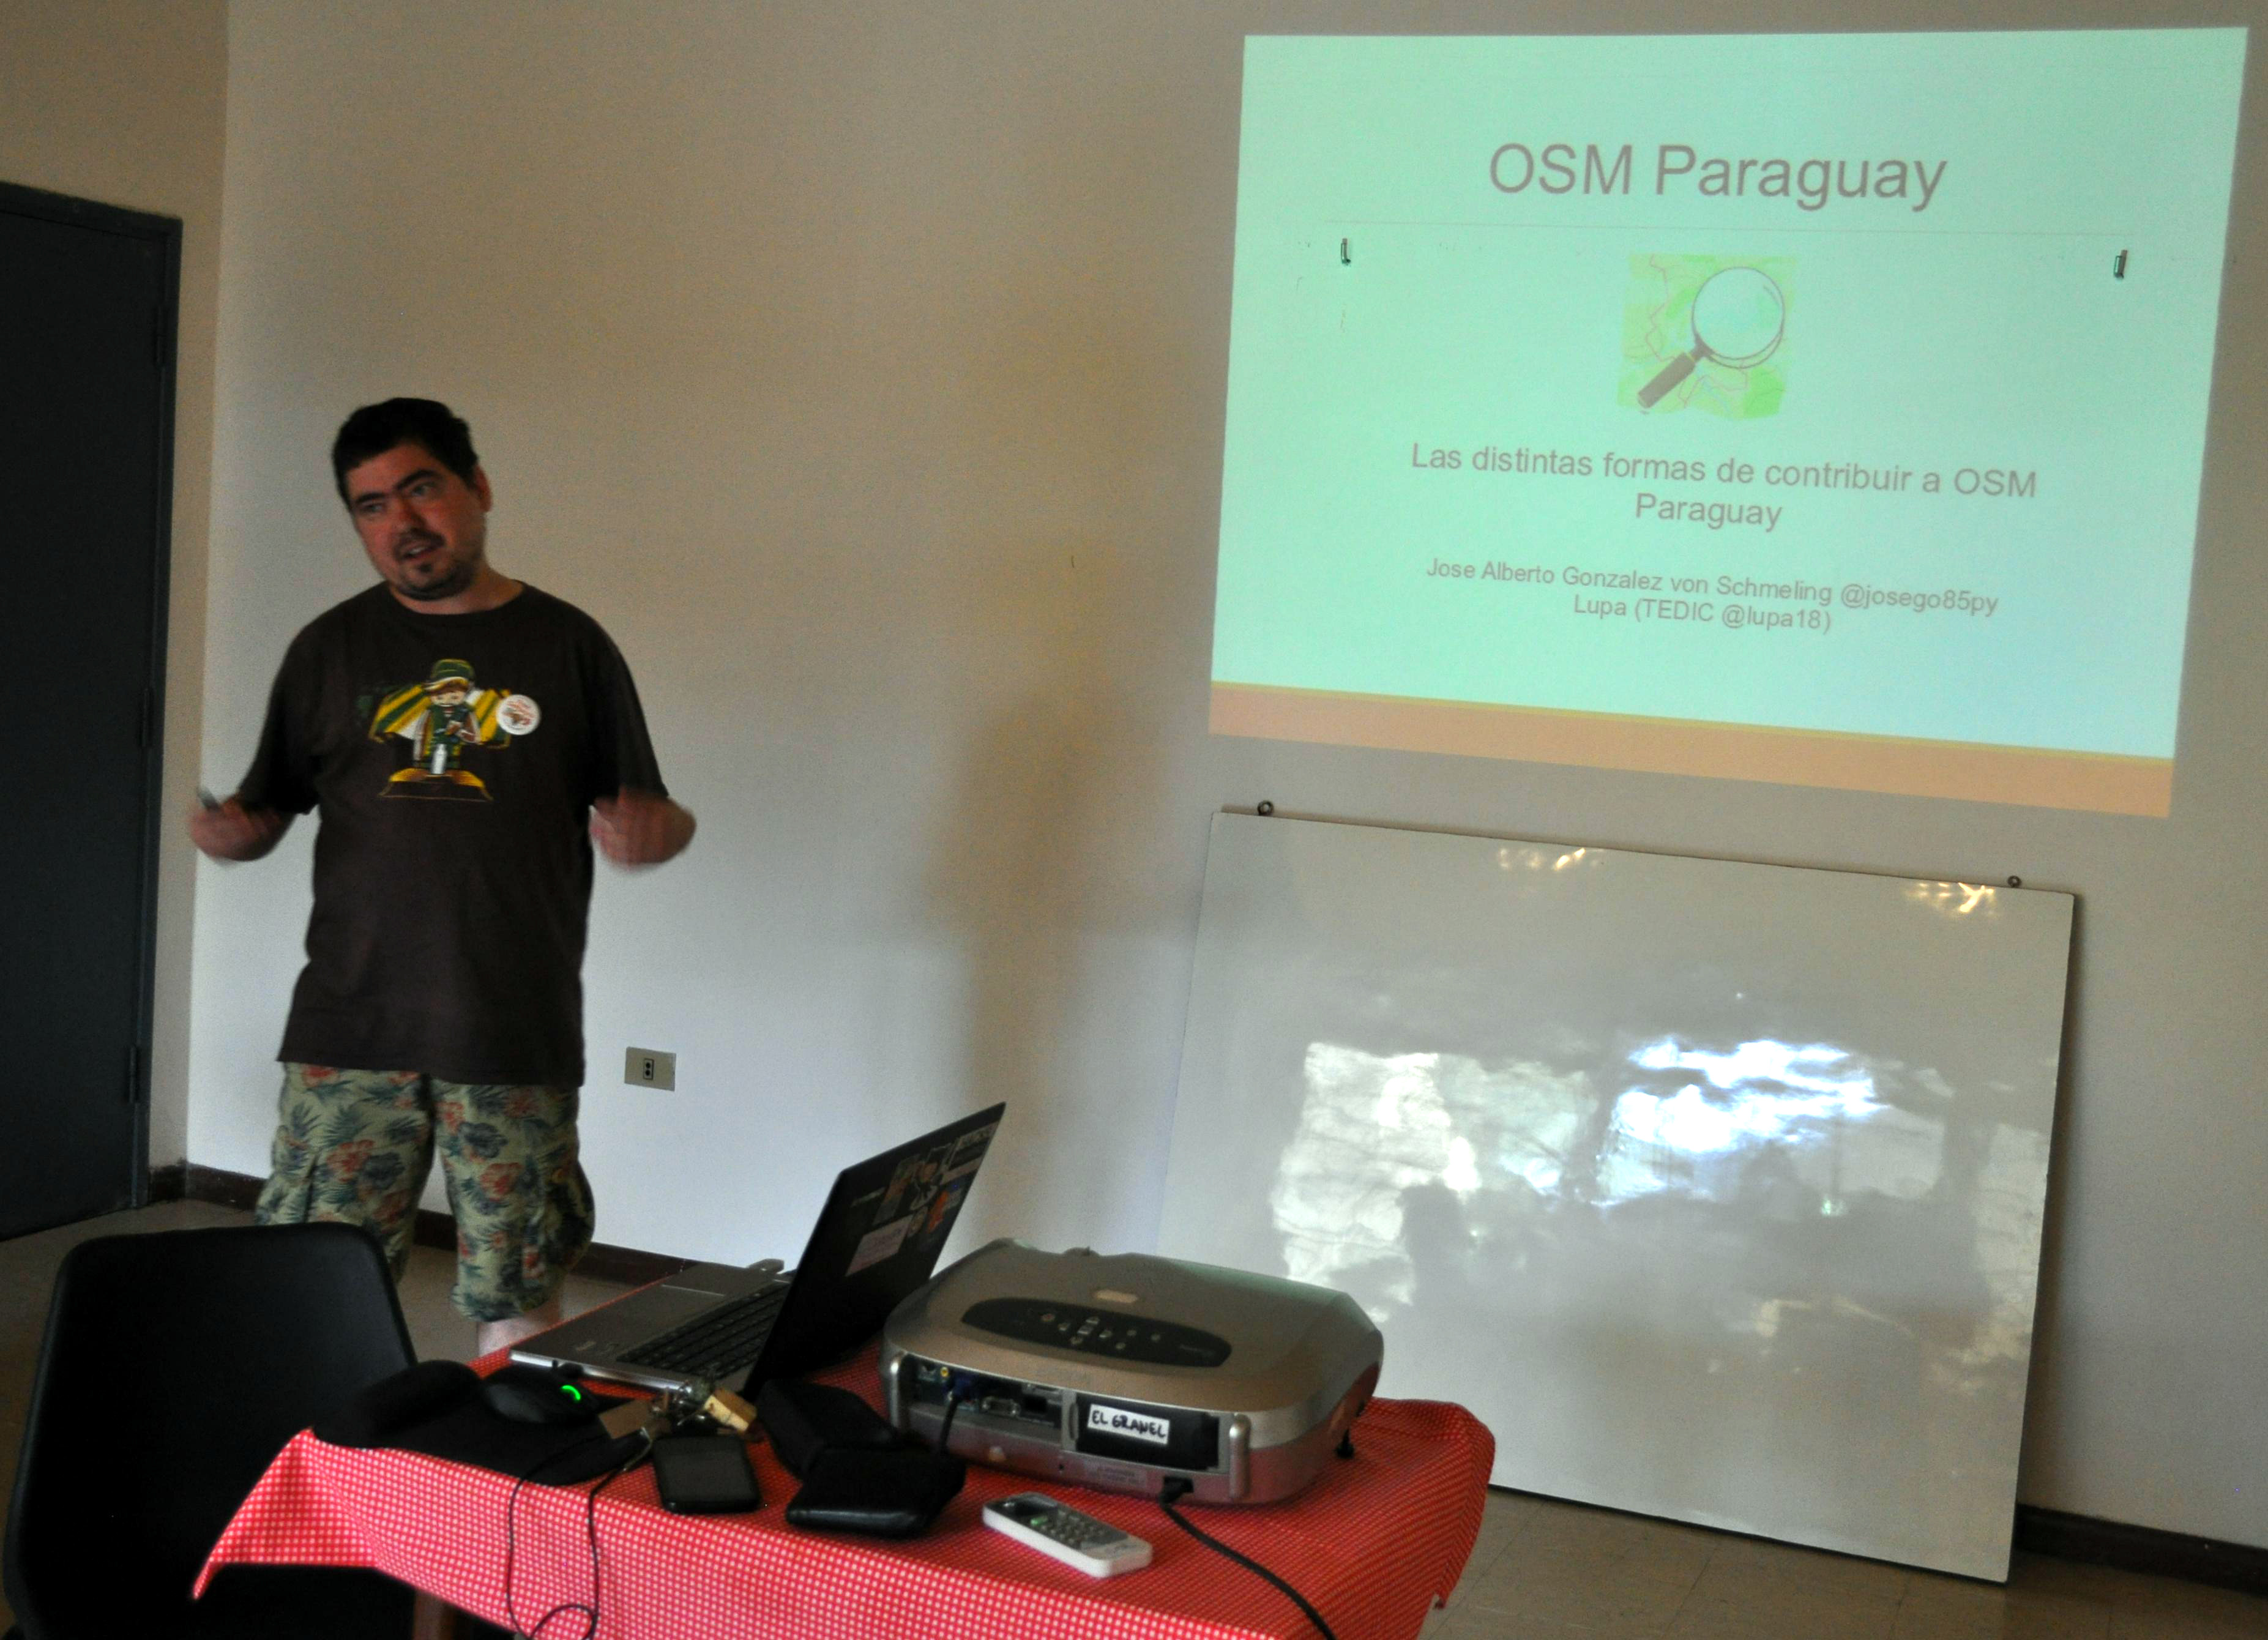  Las distintas formas de contribuir a OSM Paraguay - 21 de febrero de 2015 Open Data Day